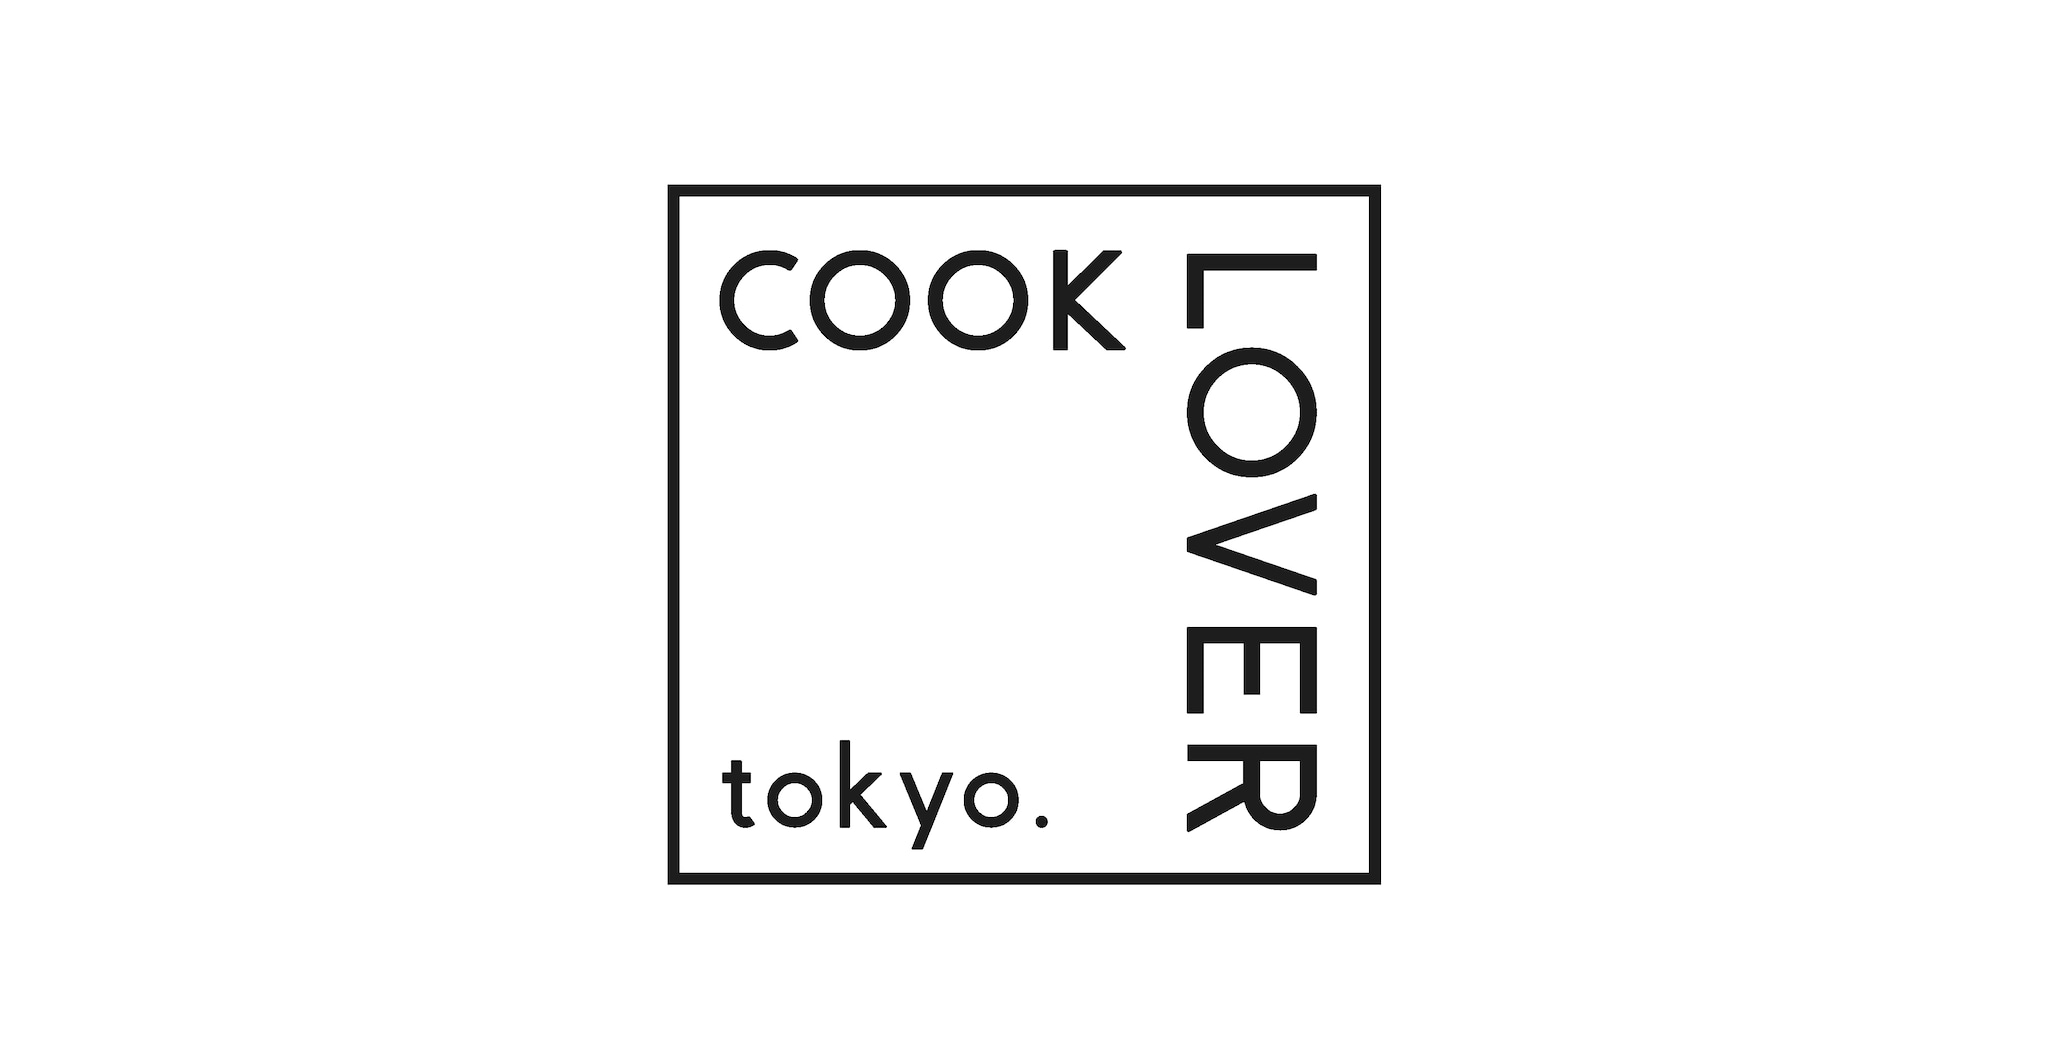 COOK LOVER tokyo. 